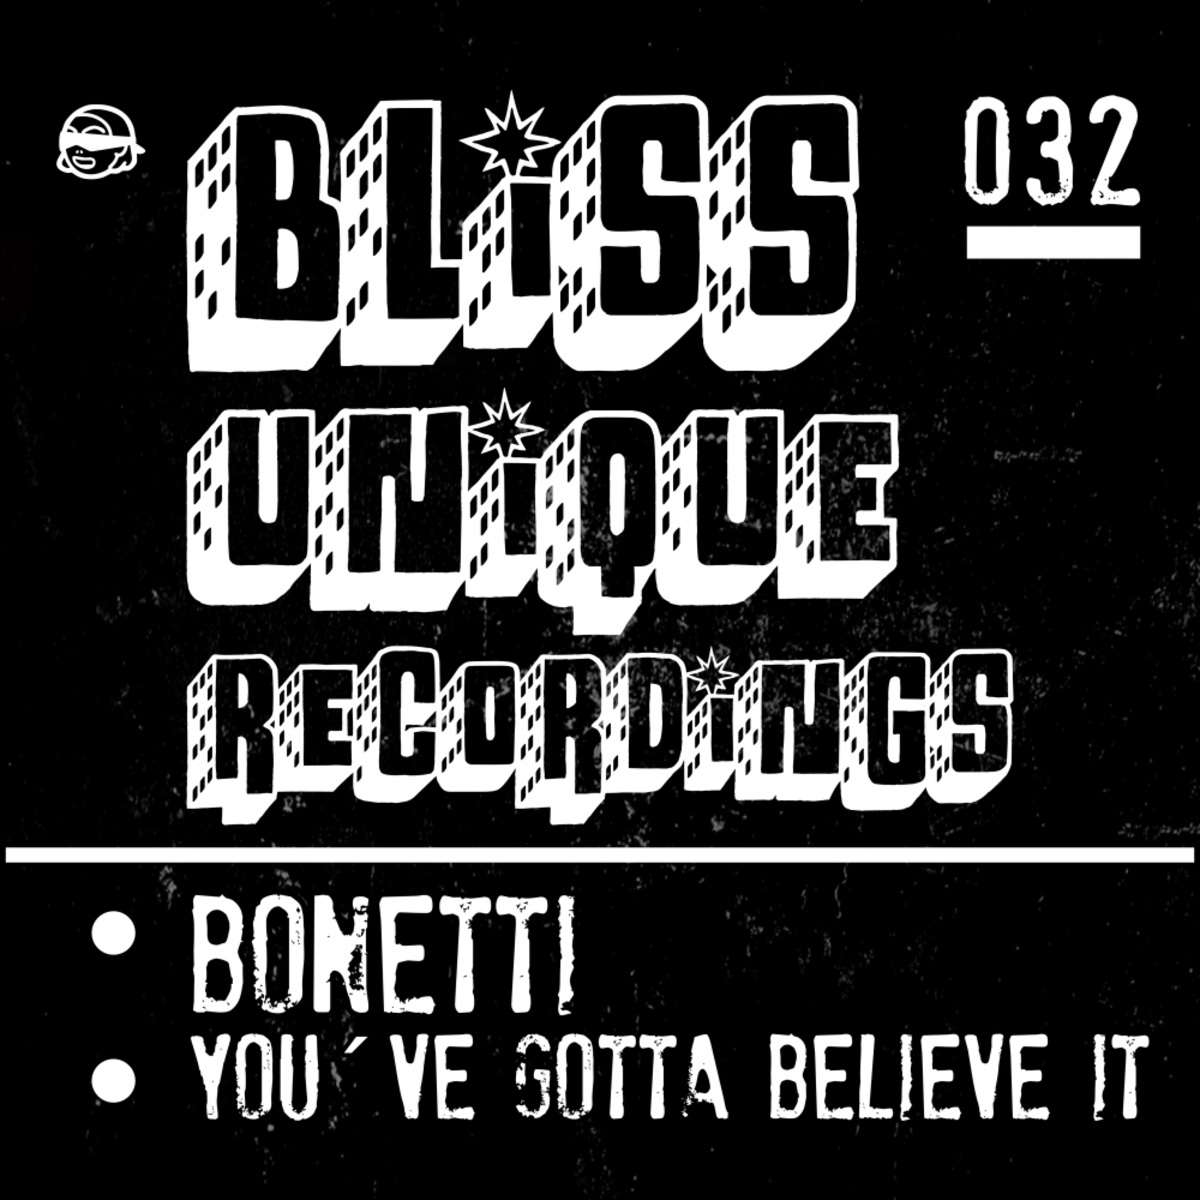 Bonetti - You've Gotta Believe It / Bliss Unique Recordings